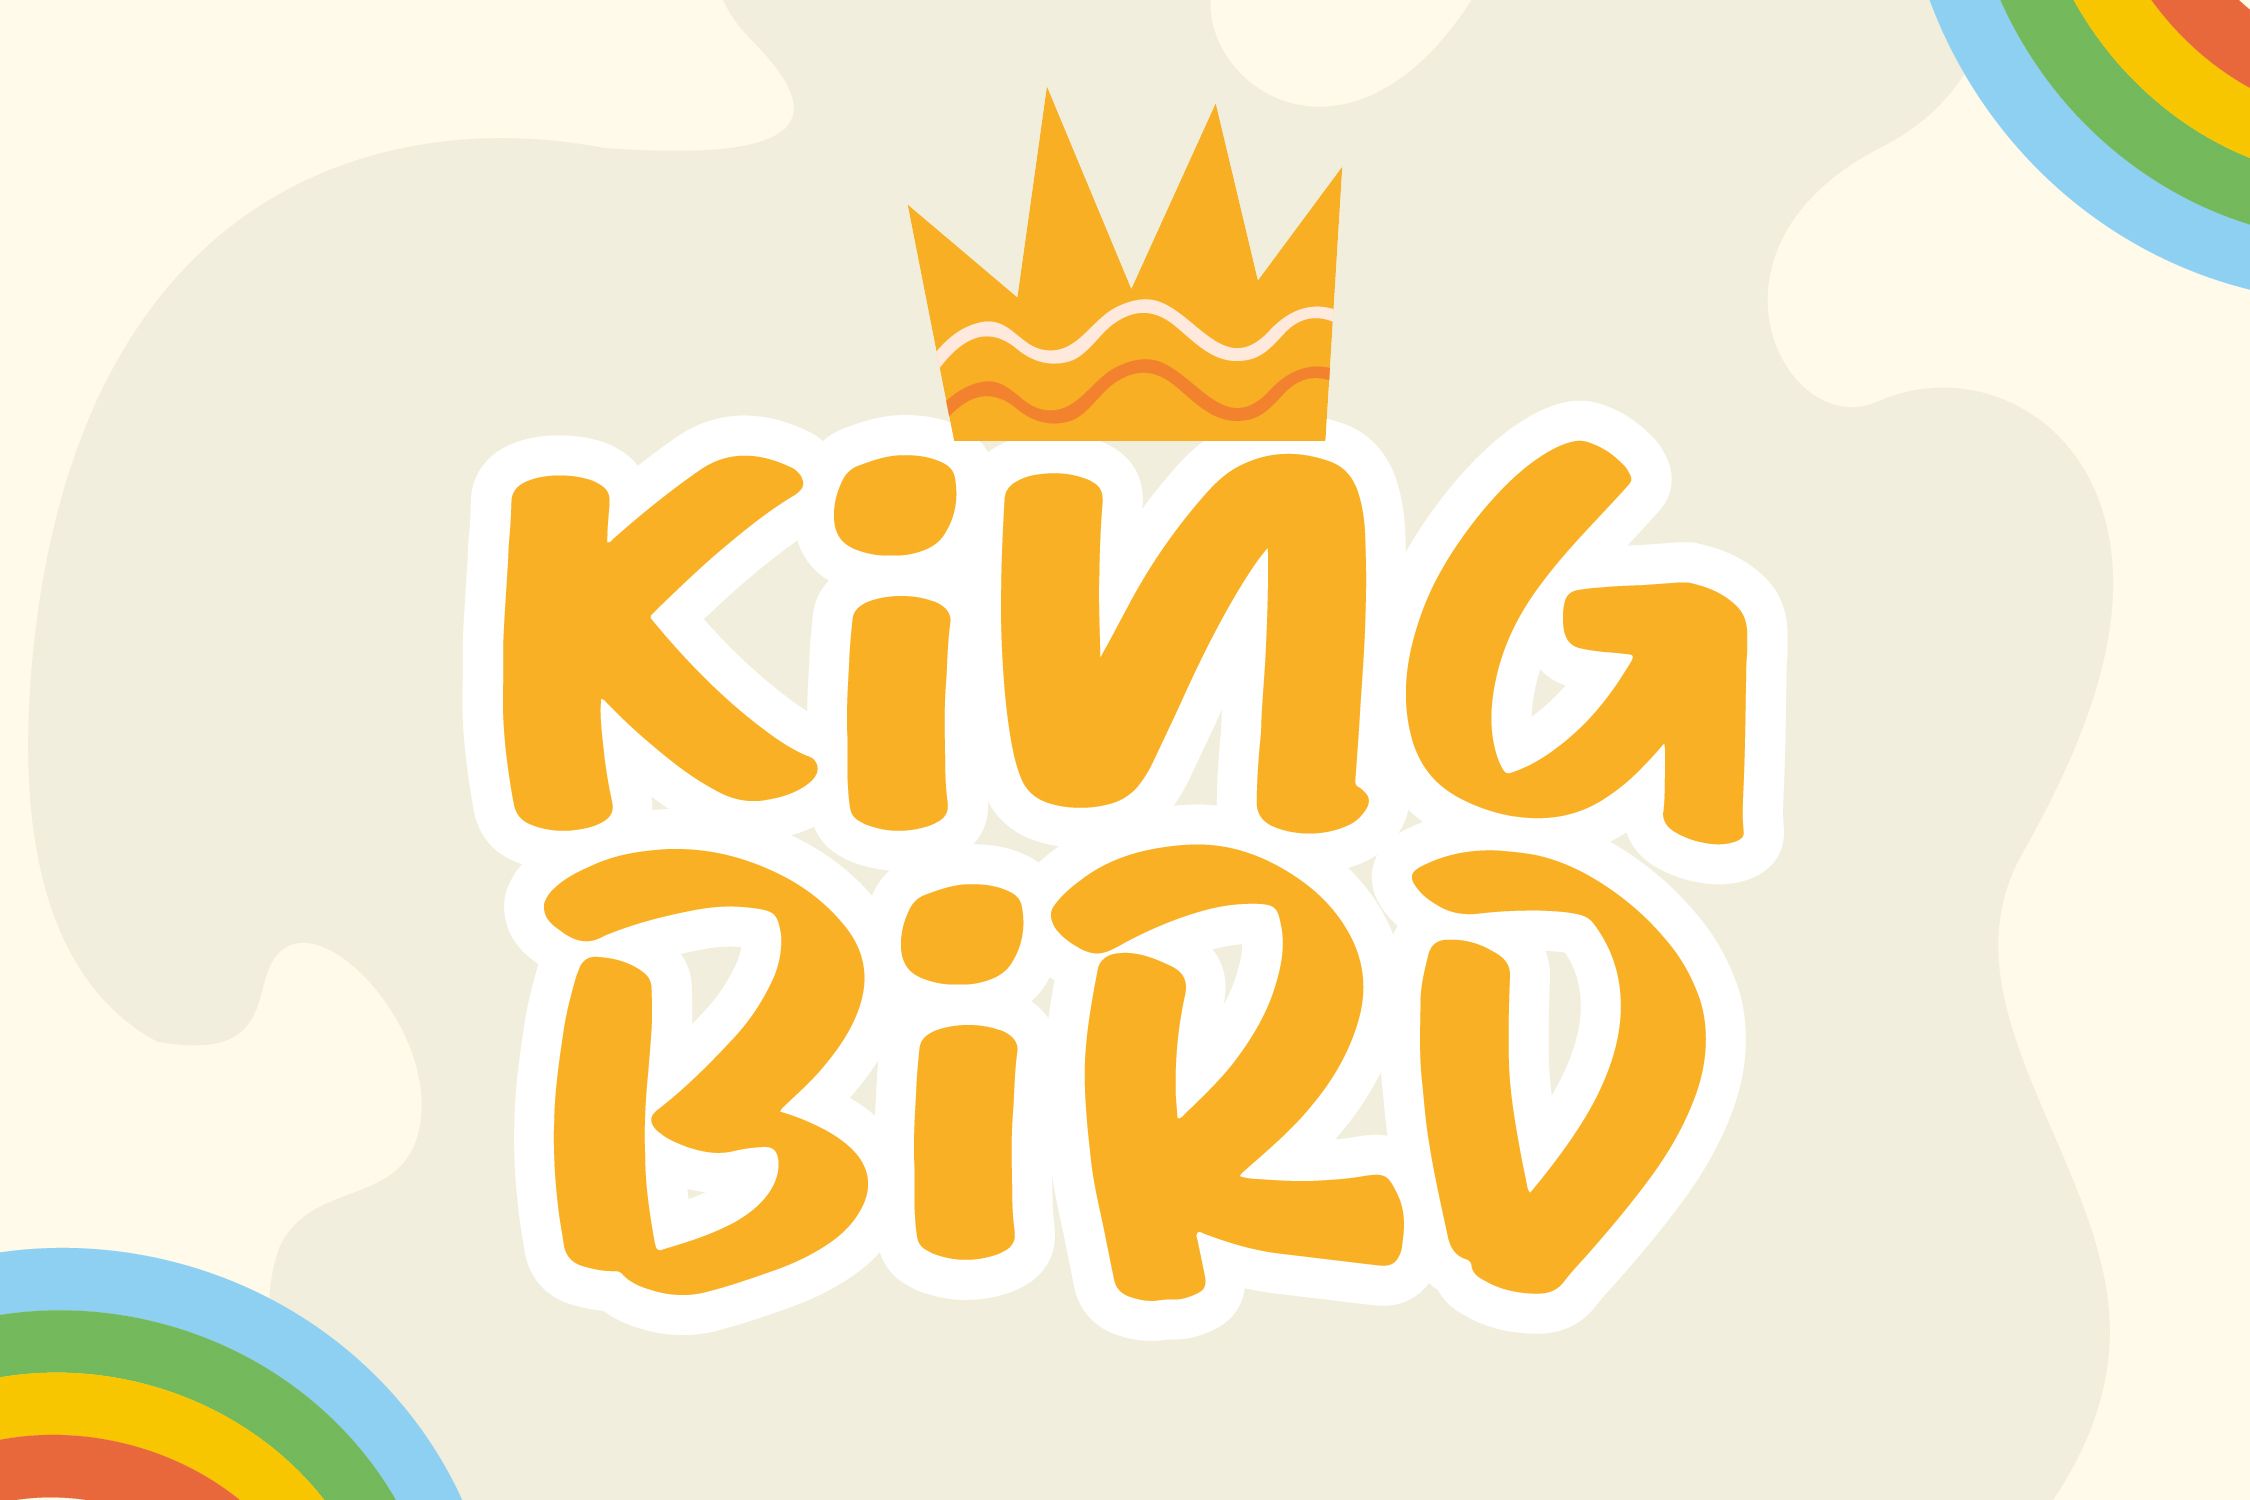 King Bird